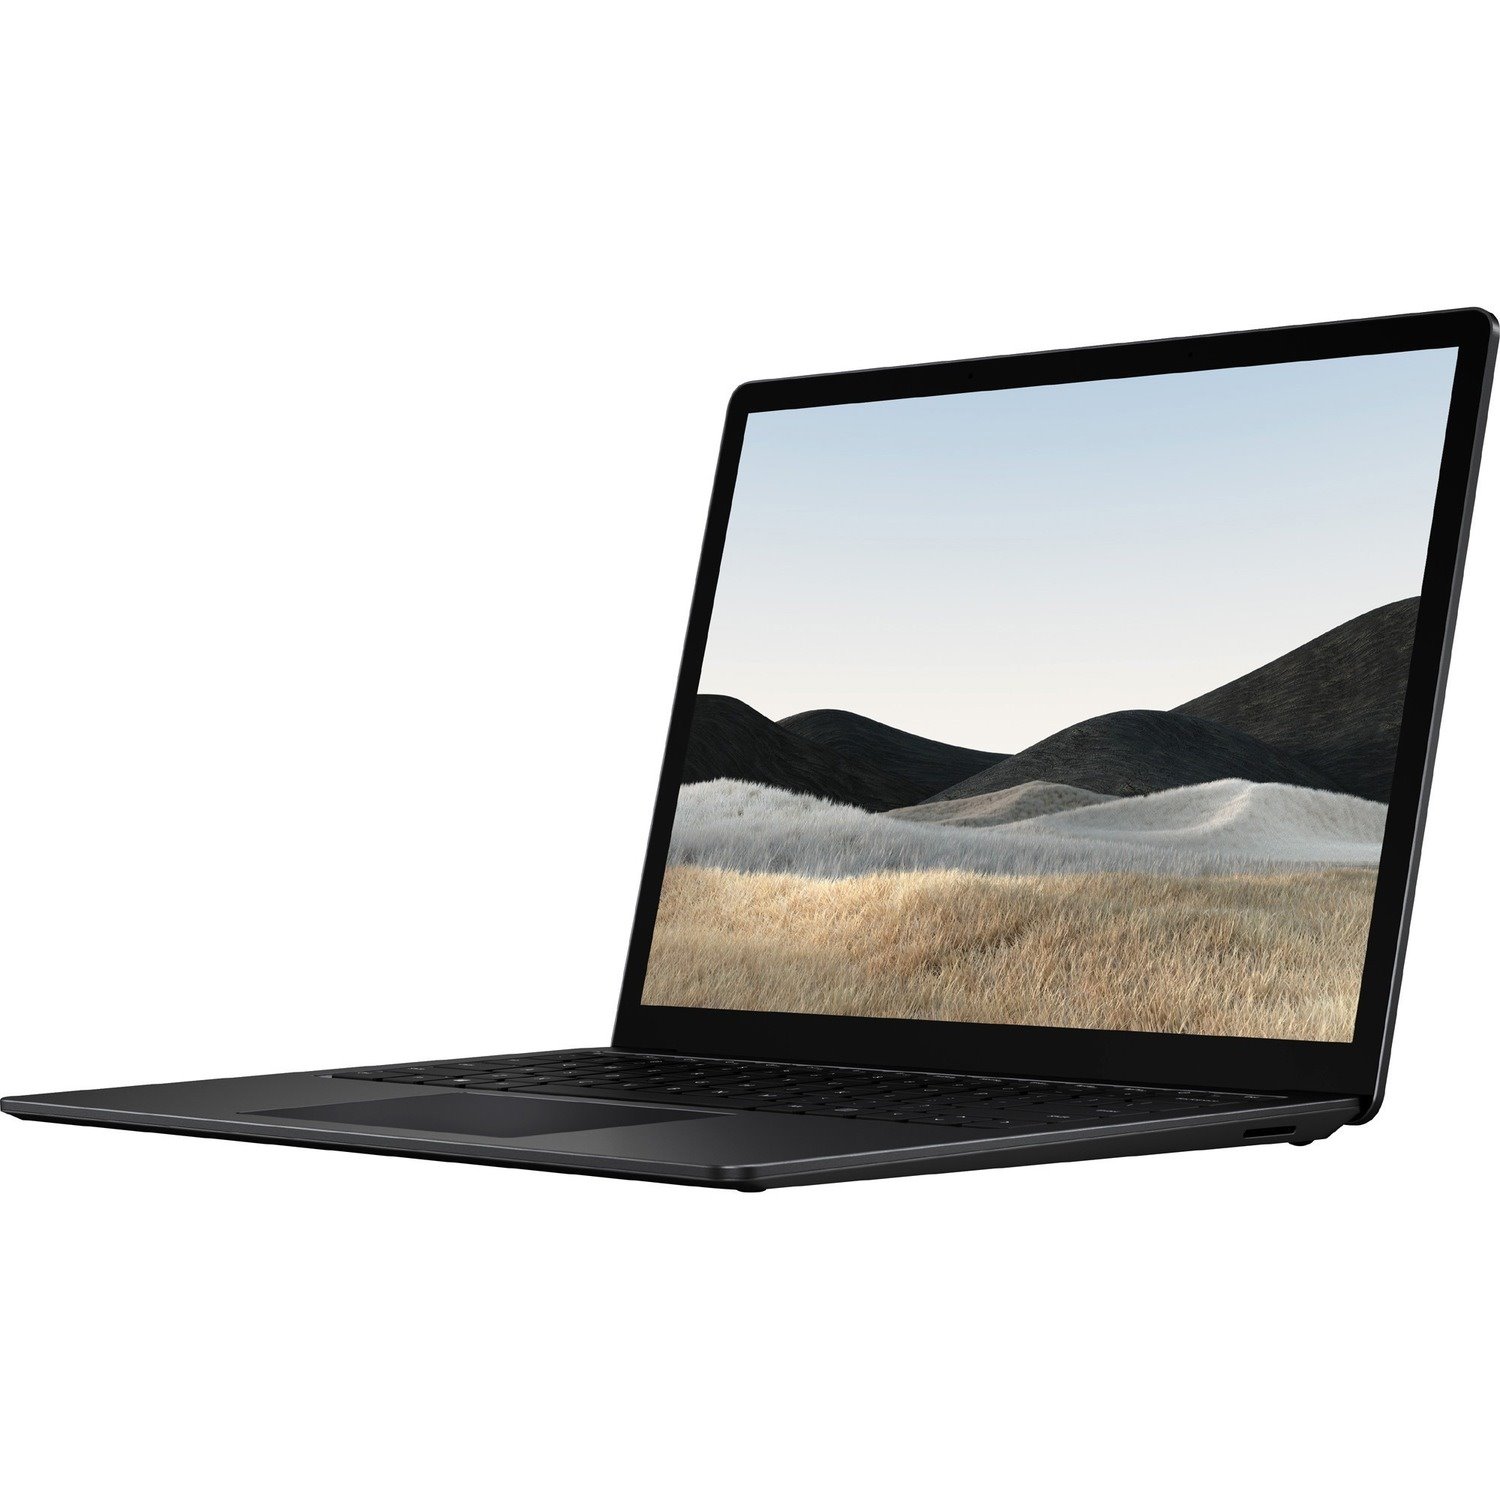 Microsoft Surface Laptop 4 34.3 cm (13.5") Touchscreen Notebook - 2256 x 1504 - Intel Core i7 - 16 GB Total RAM - 256 GB SSD - Matte Black